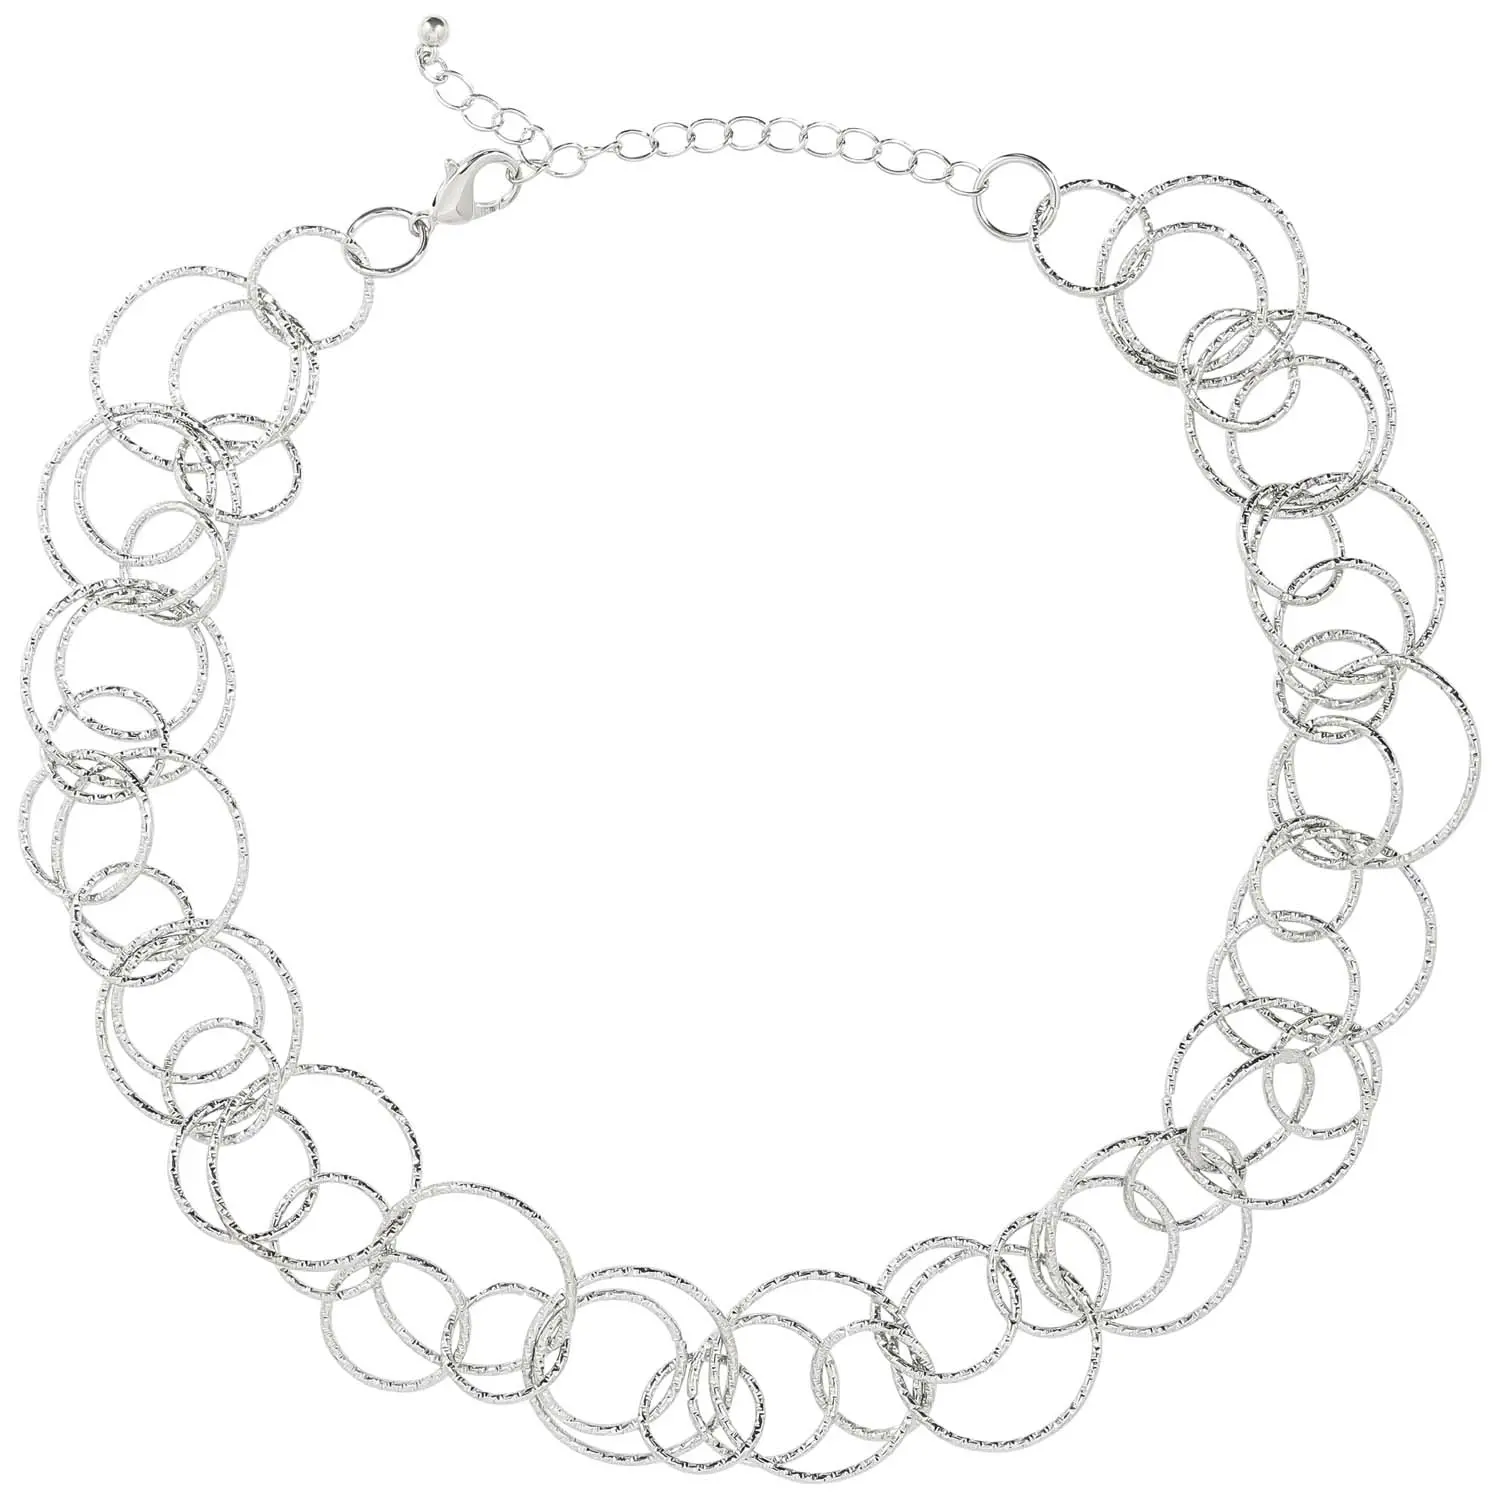 Collar - Connected Circles